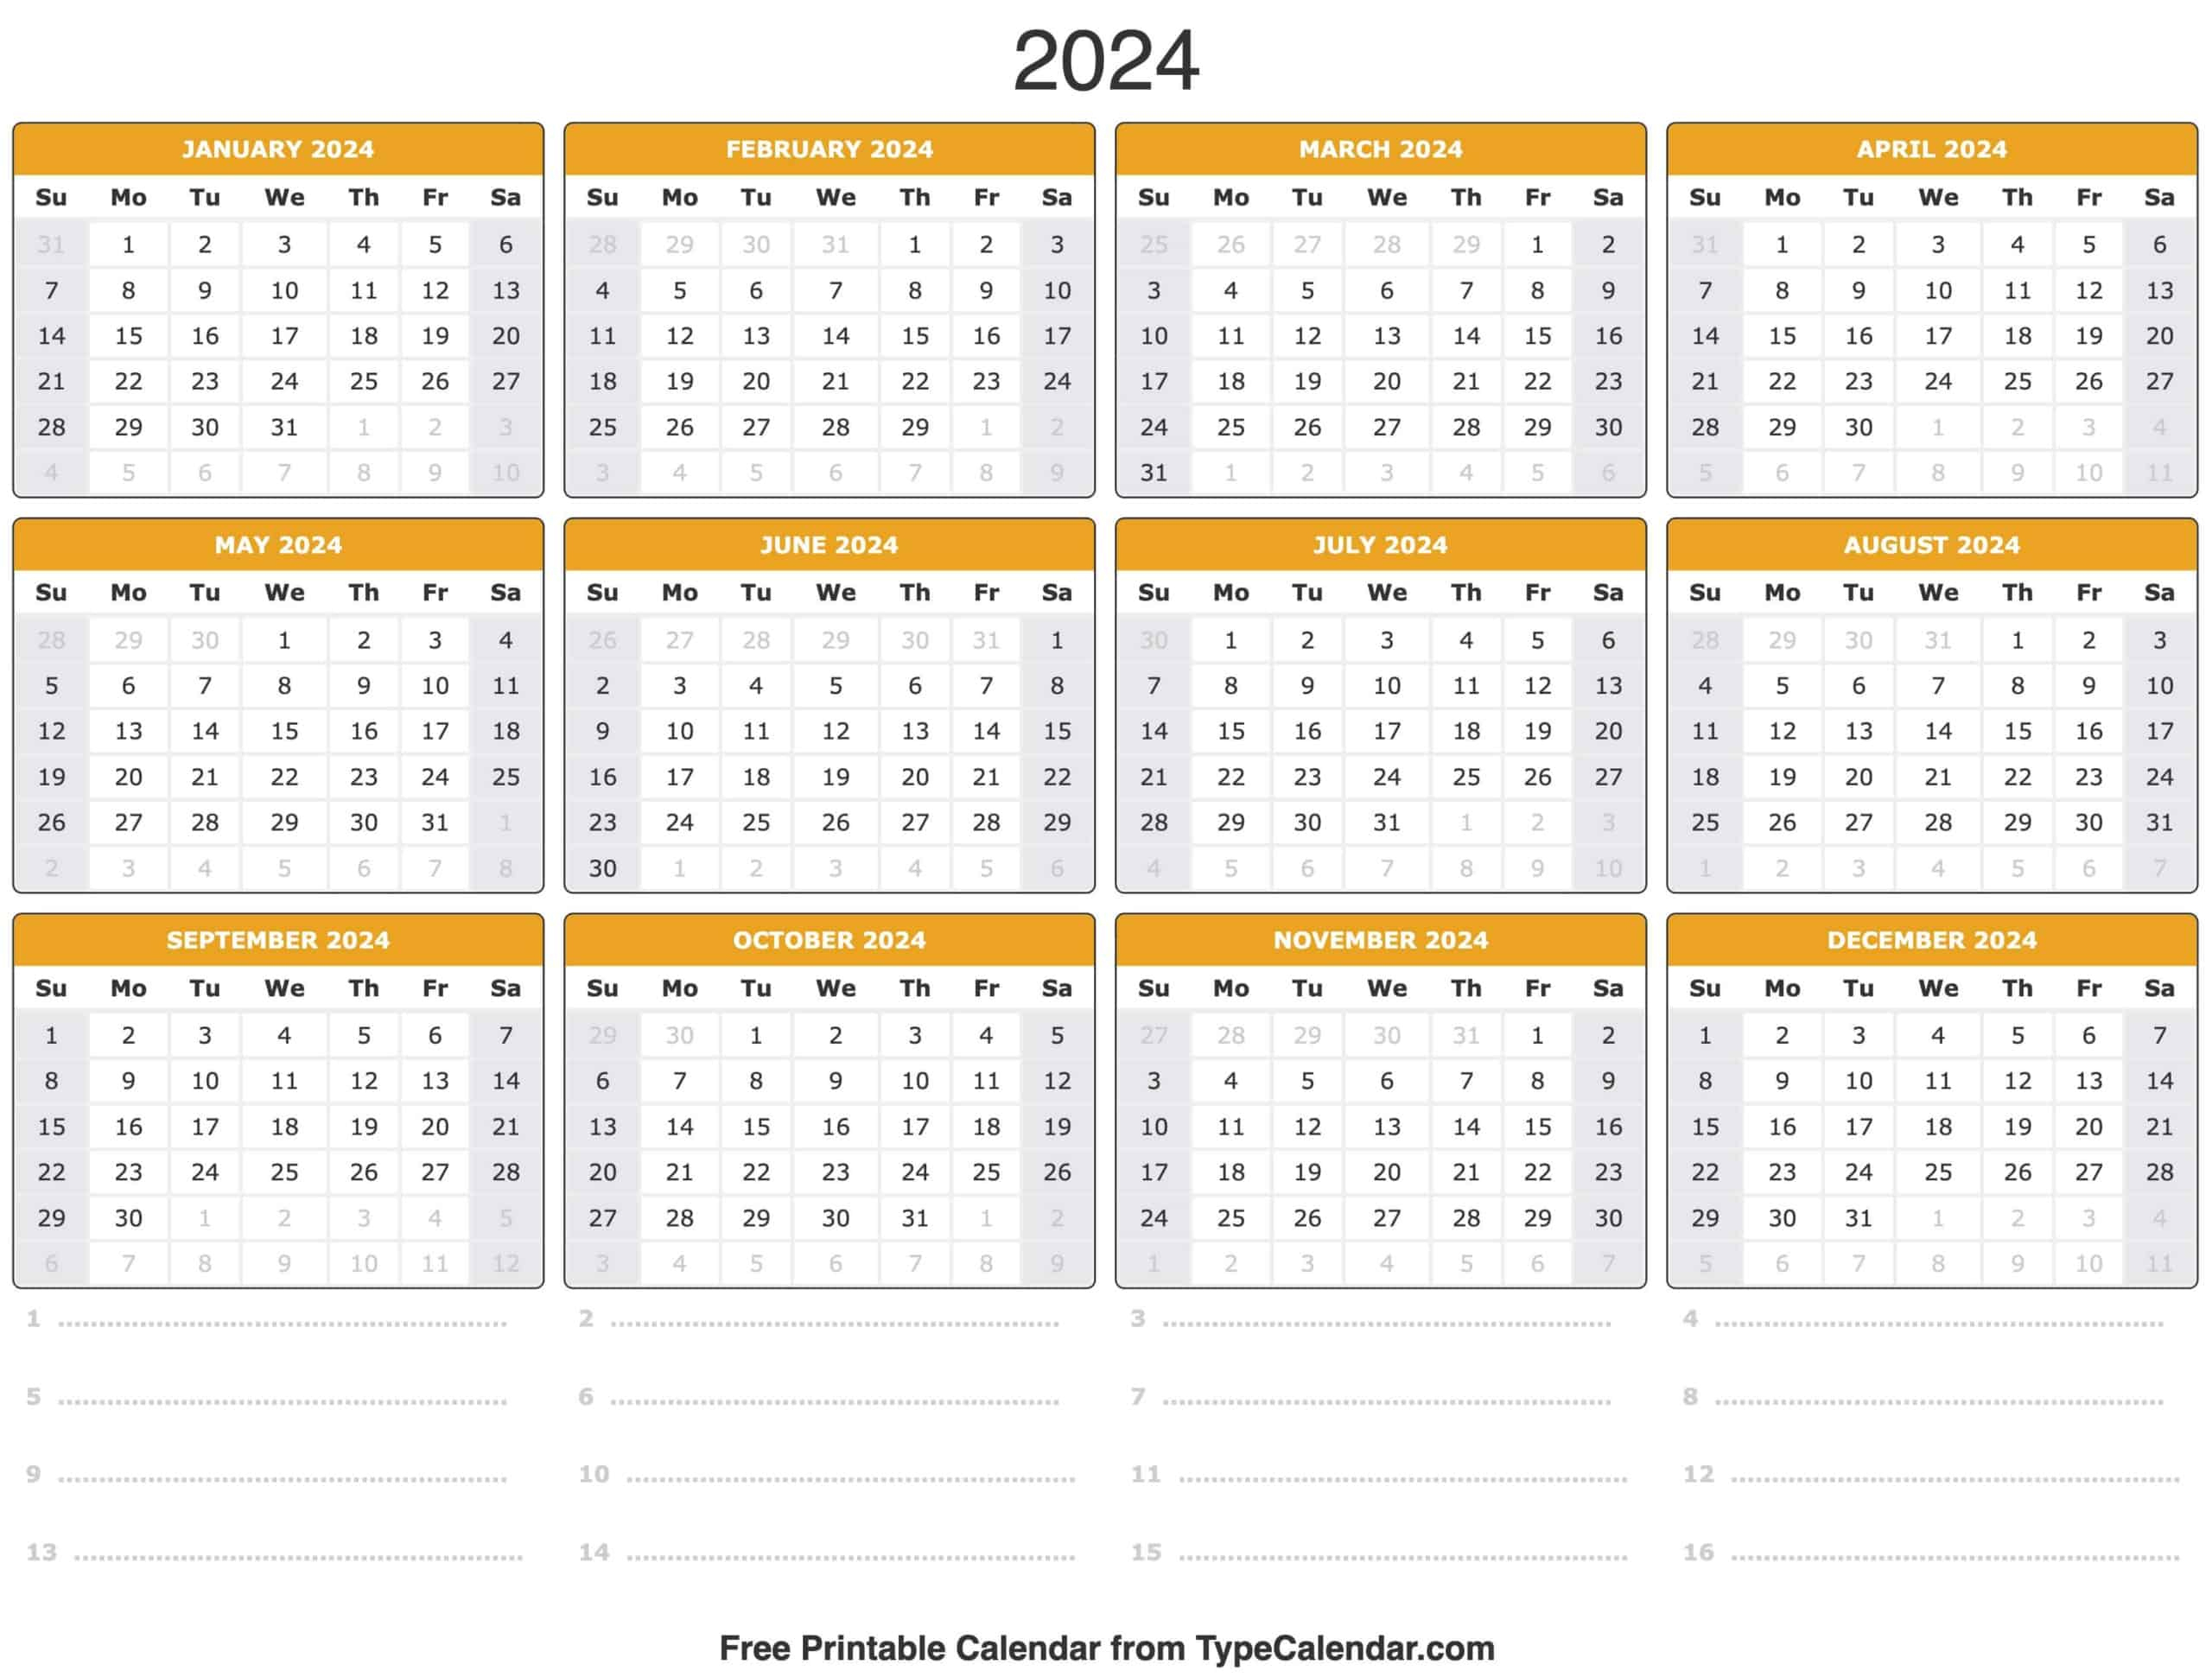 2024 Calendar: Free Printable Calendar With Holidays | Yearly Calendar Events 2024